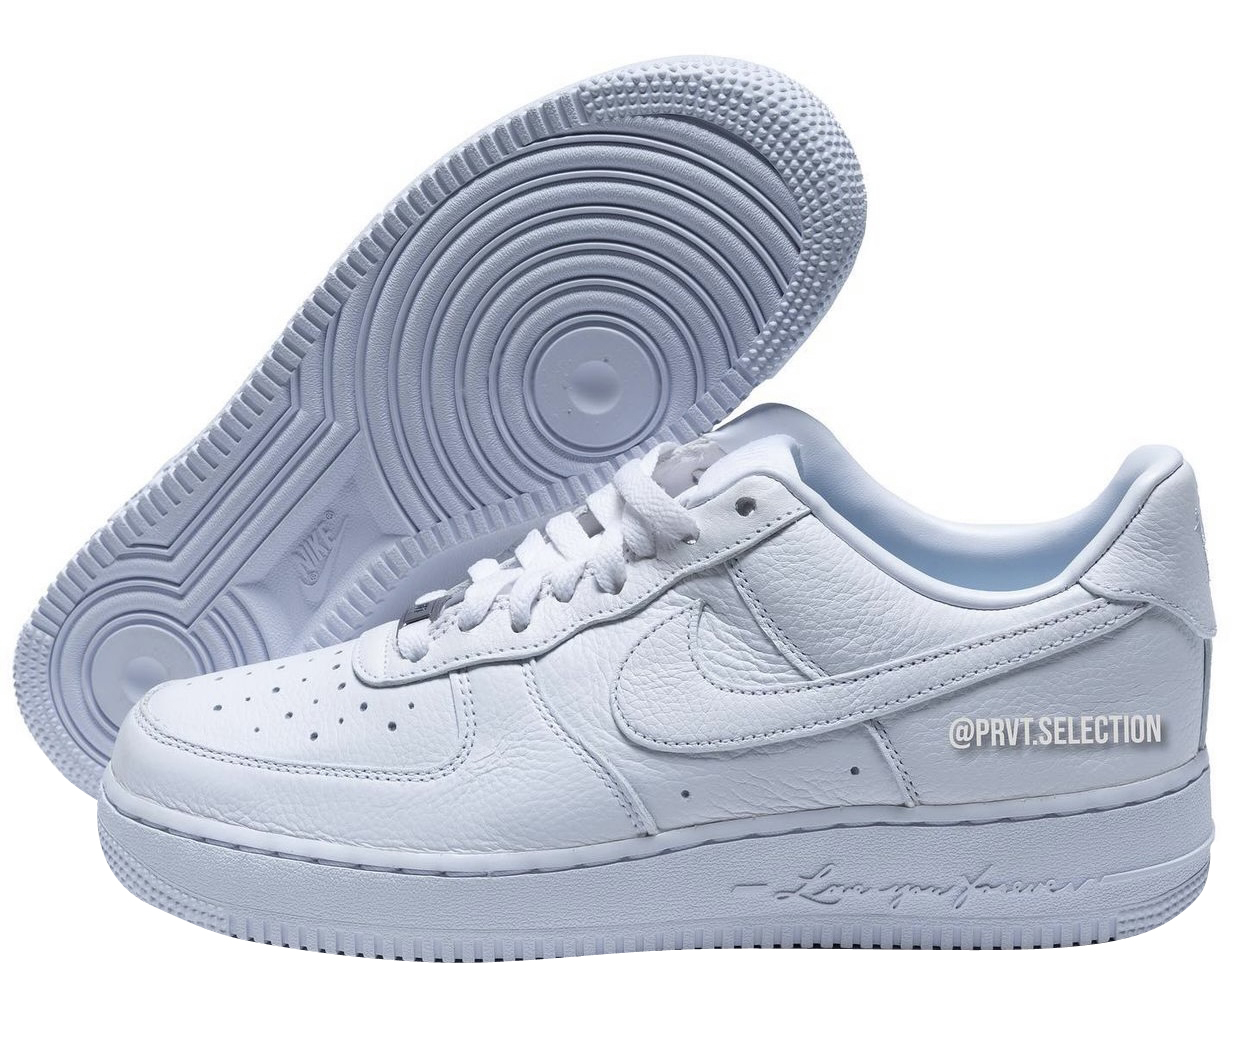 X Drake air force 1 'certified lover boy' sneaker